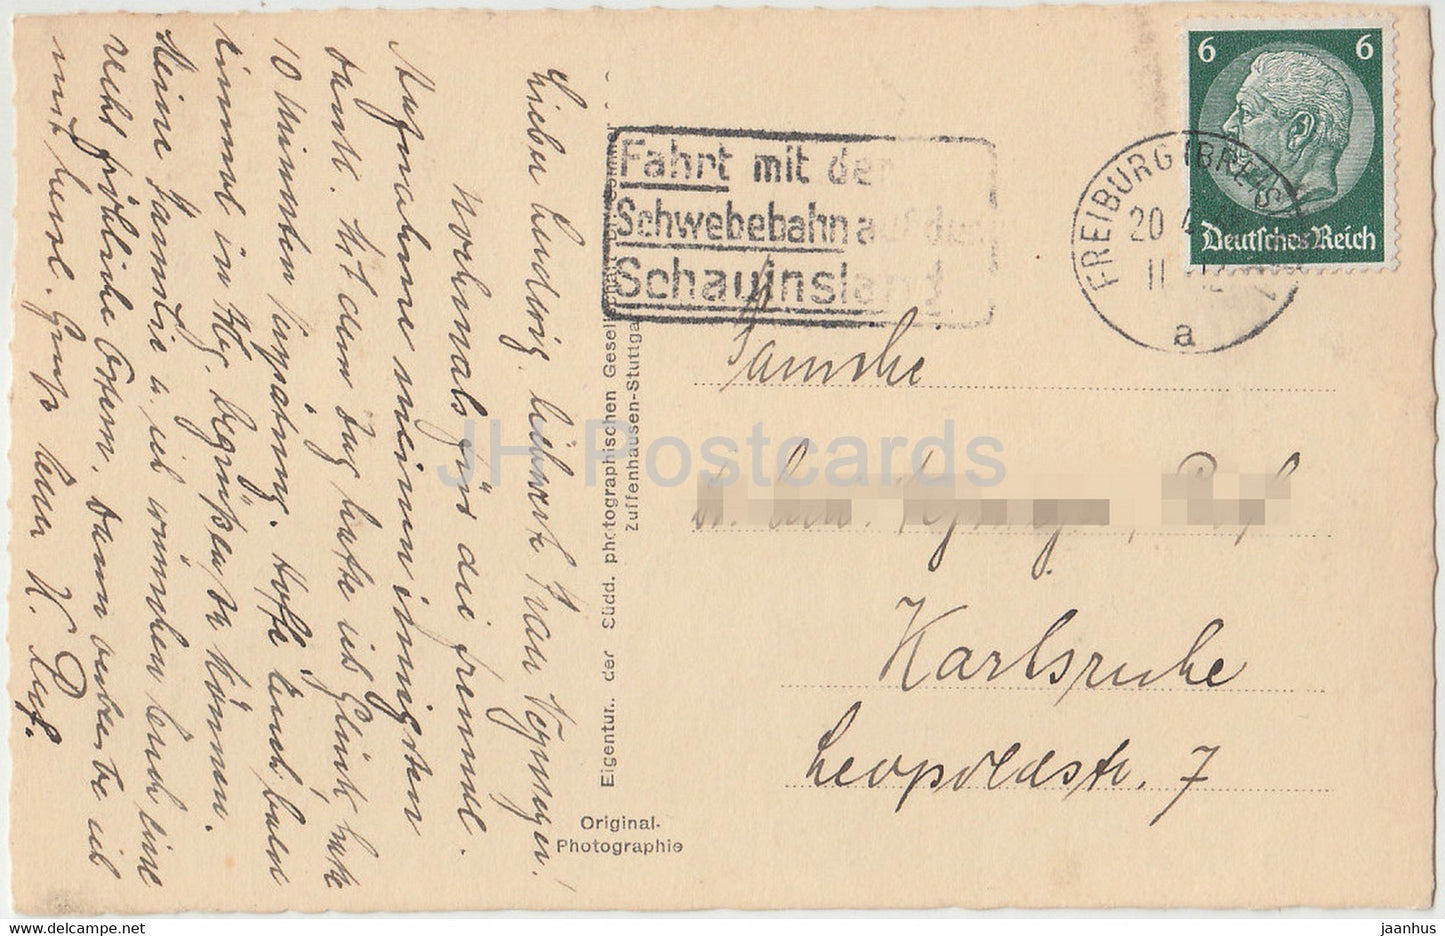 Freiburg i B - 3634 - old postcard - 1943 - Germany - used